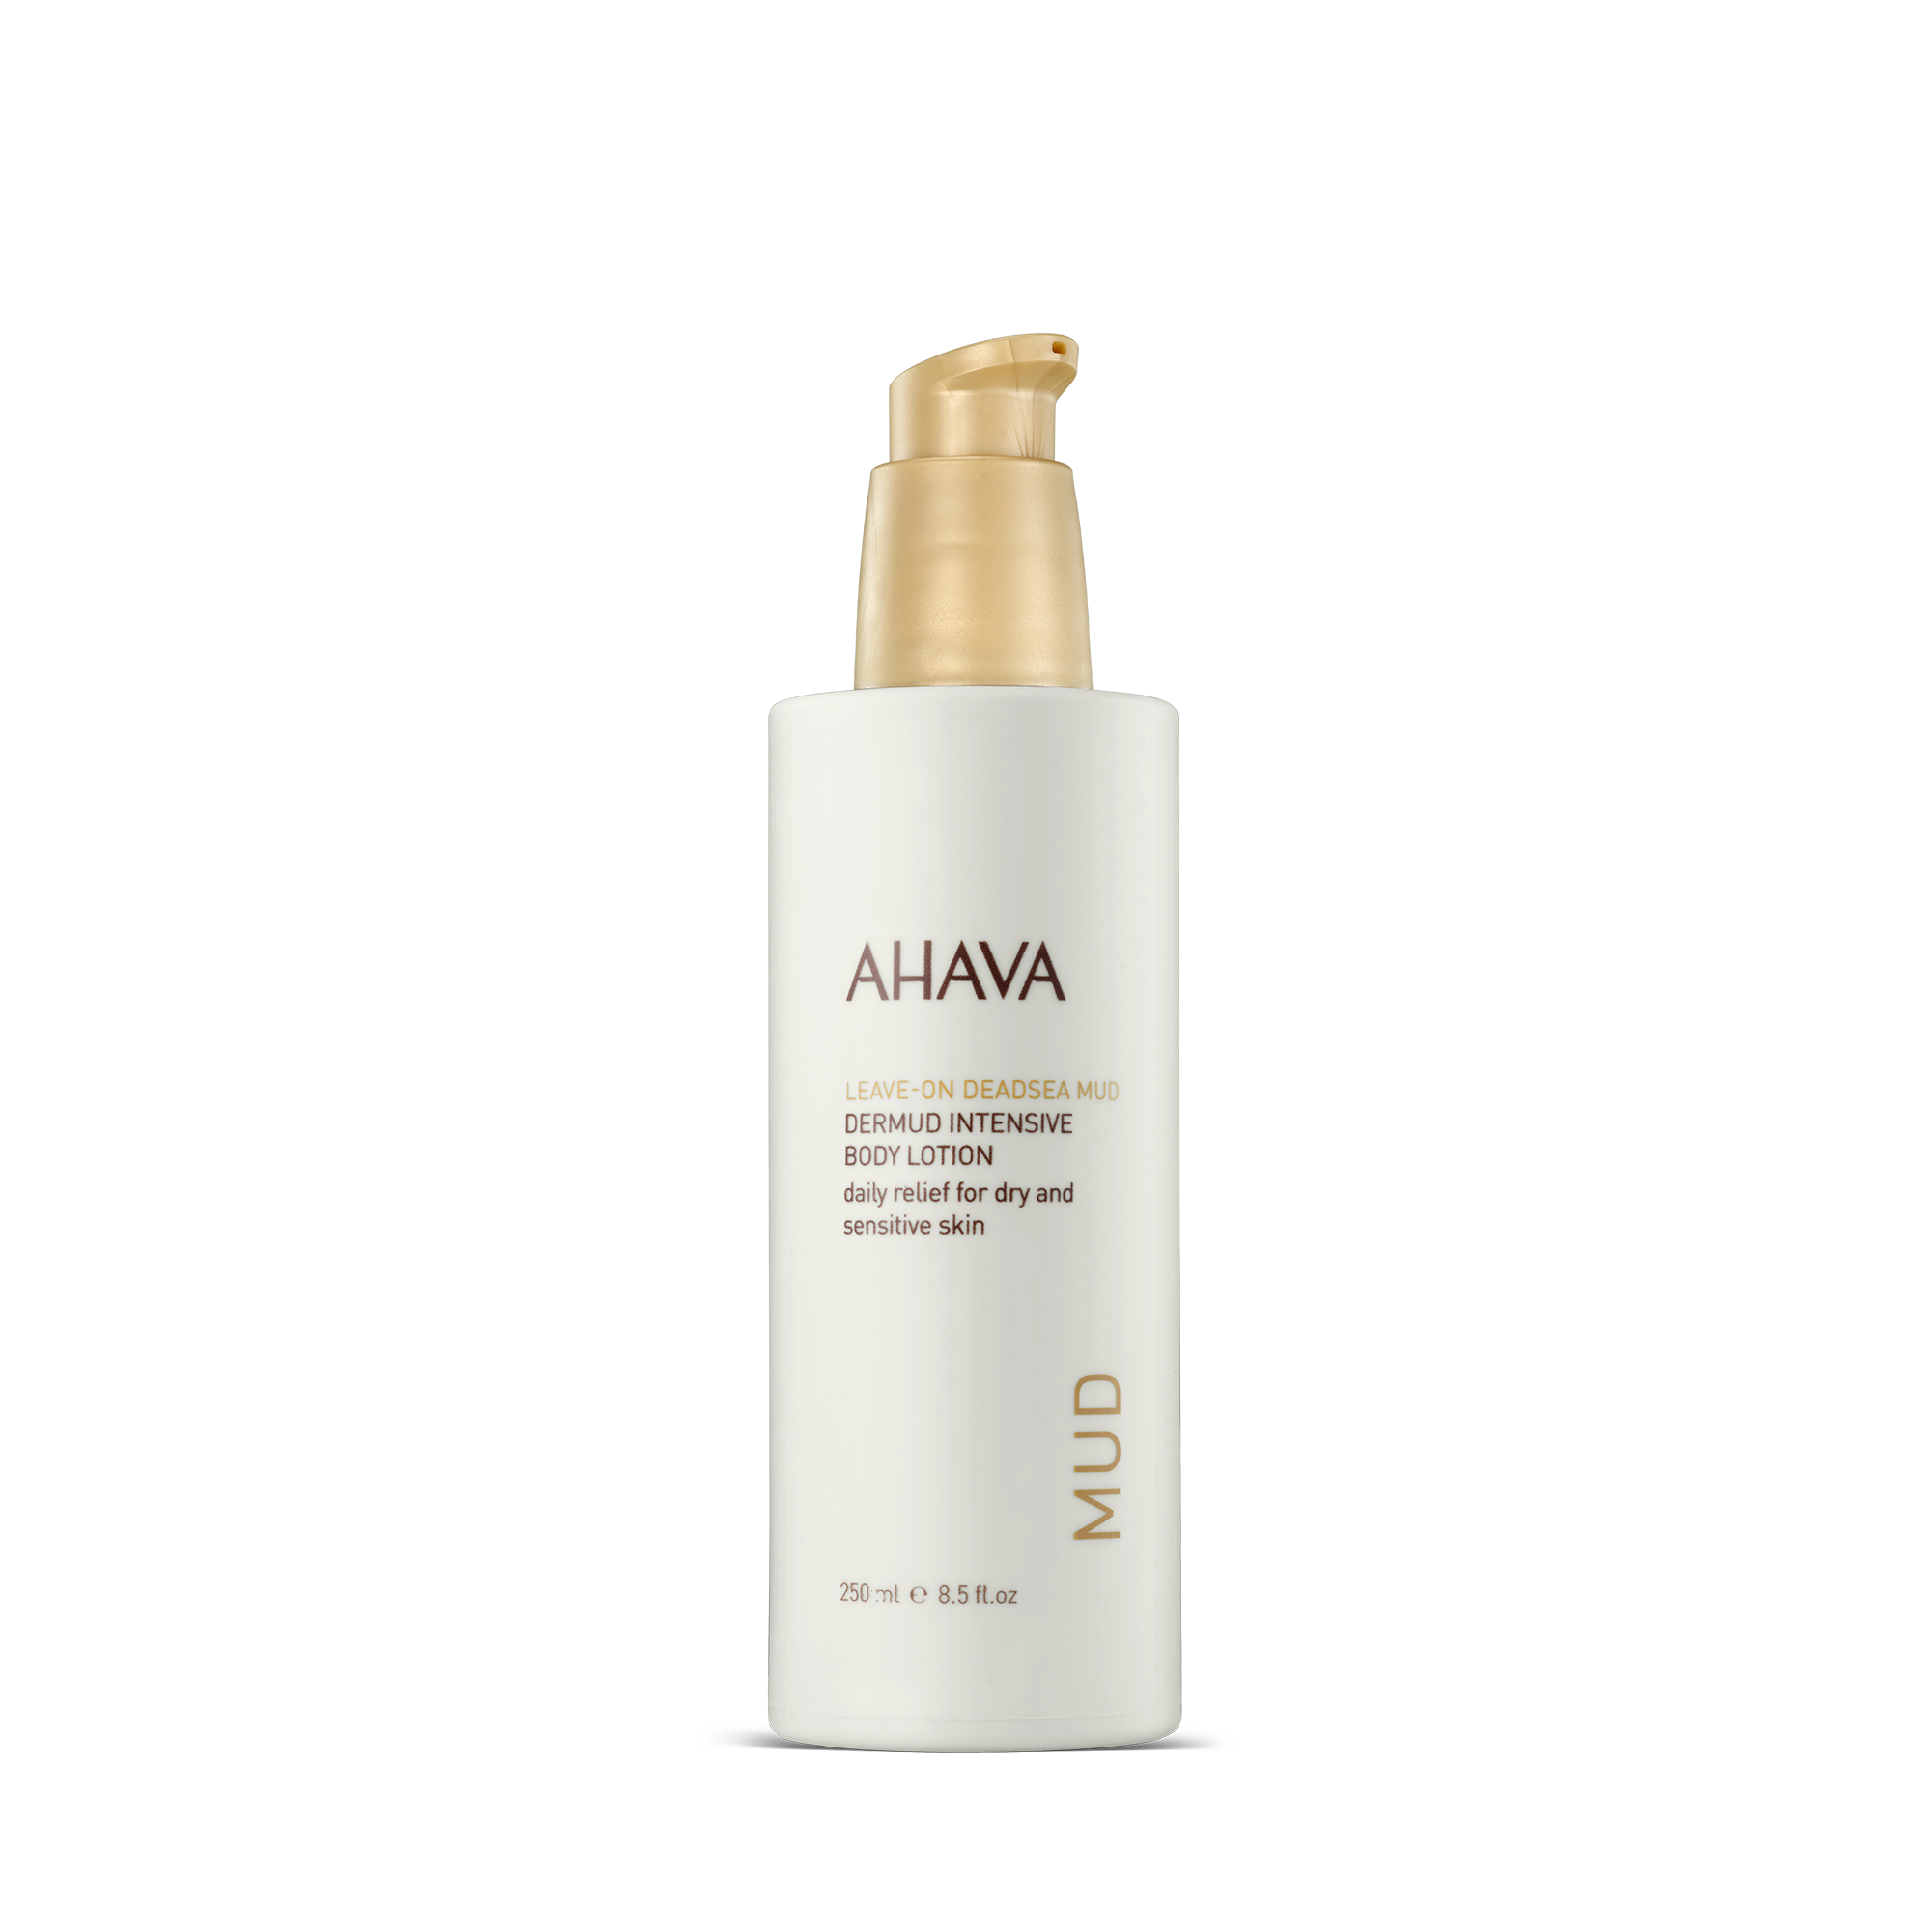 AHAVA® Dermud Mud AHAVA Global – Dead Lotion Intensive Sea Body